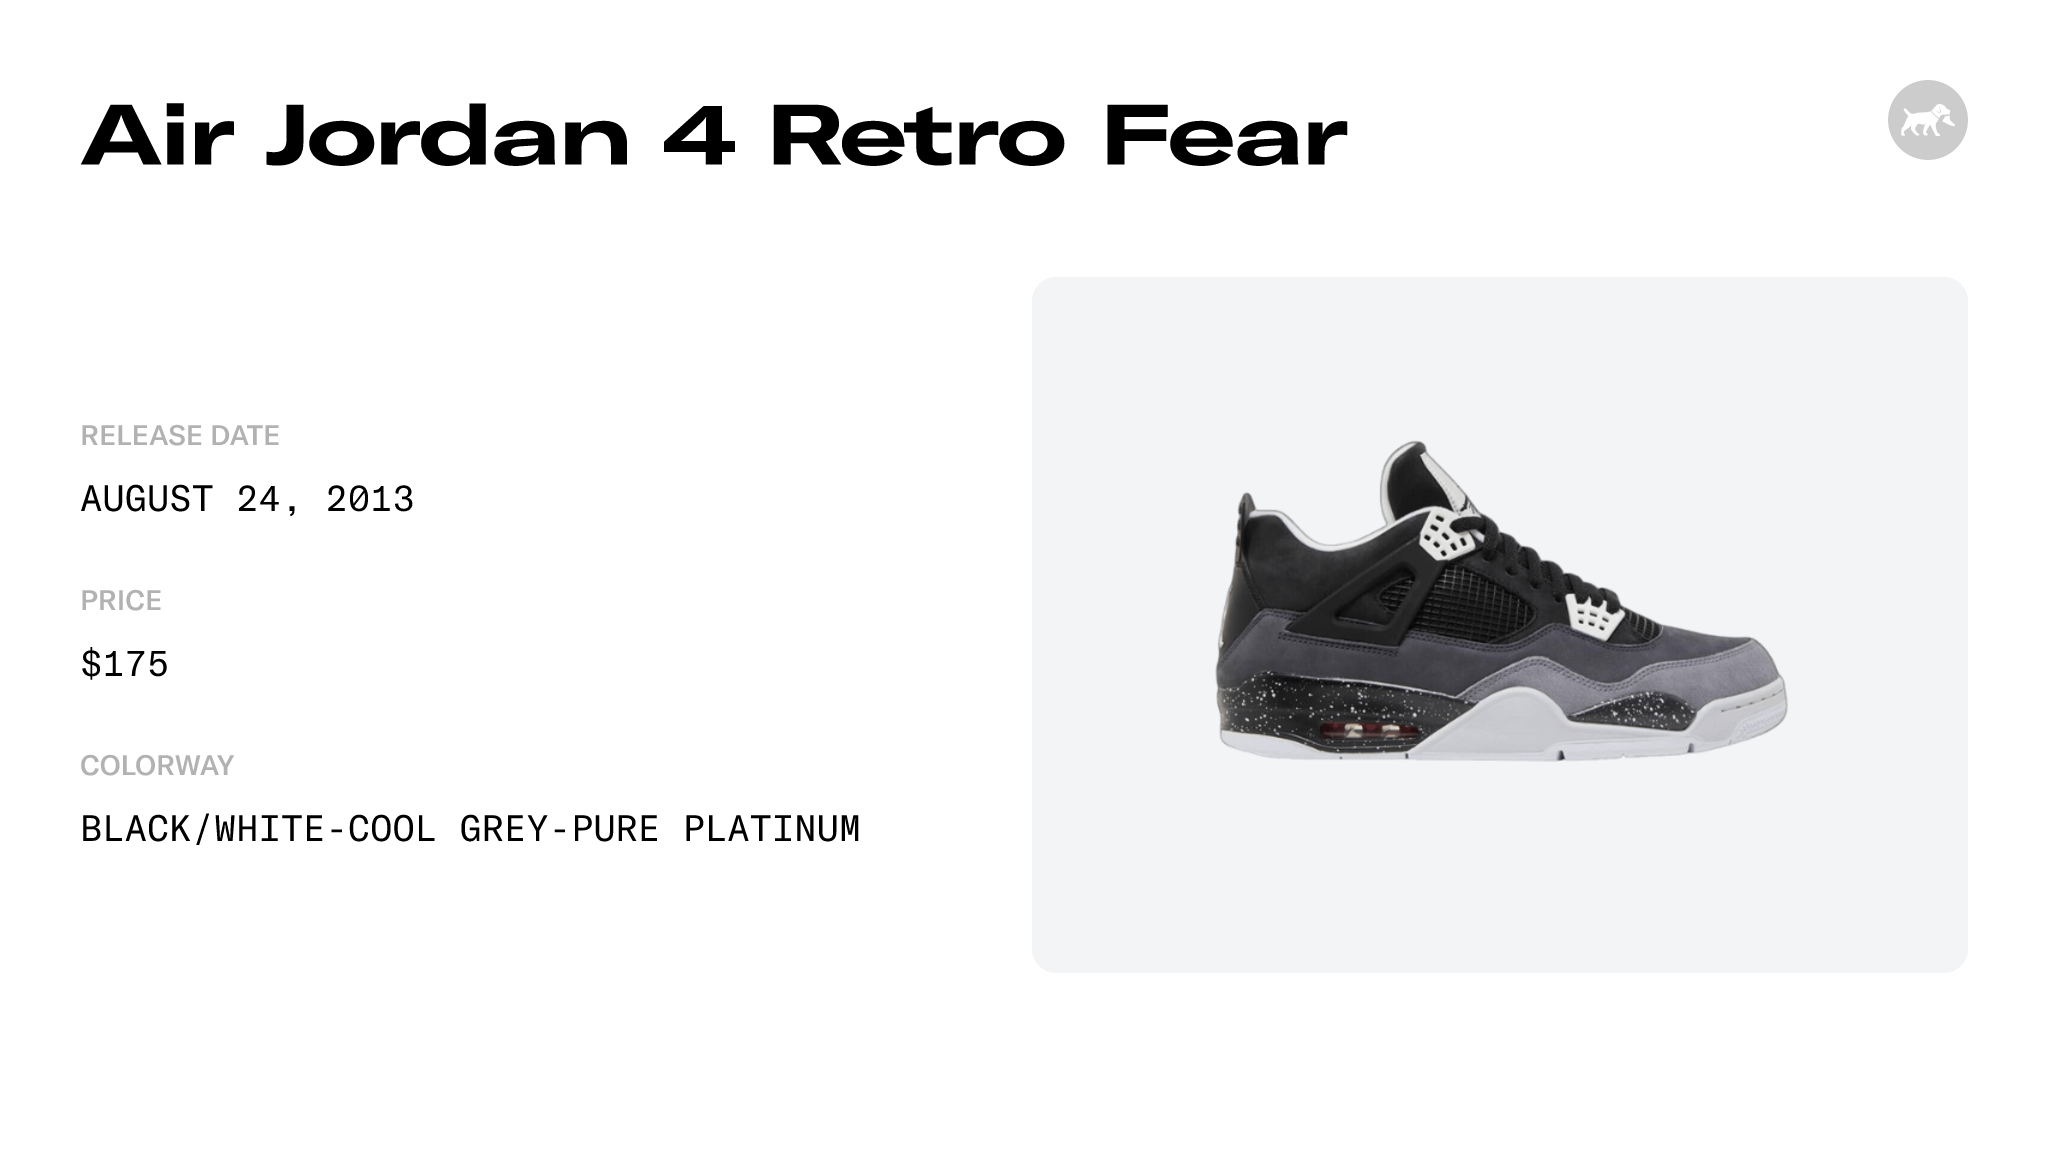 Air Jordan 4 Retro Fear - 626969-030 Raffles and Release Date